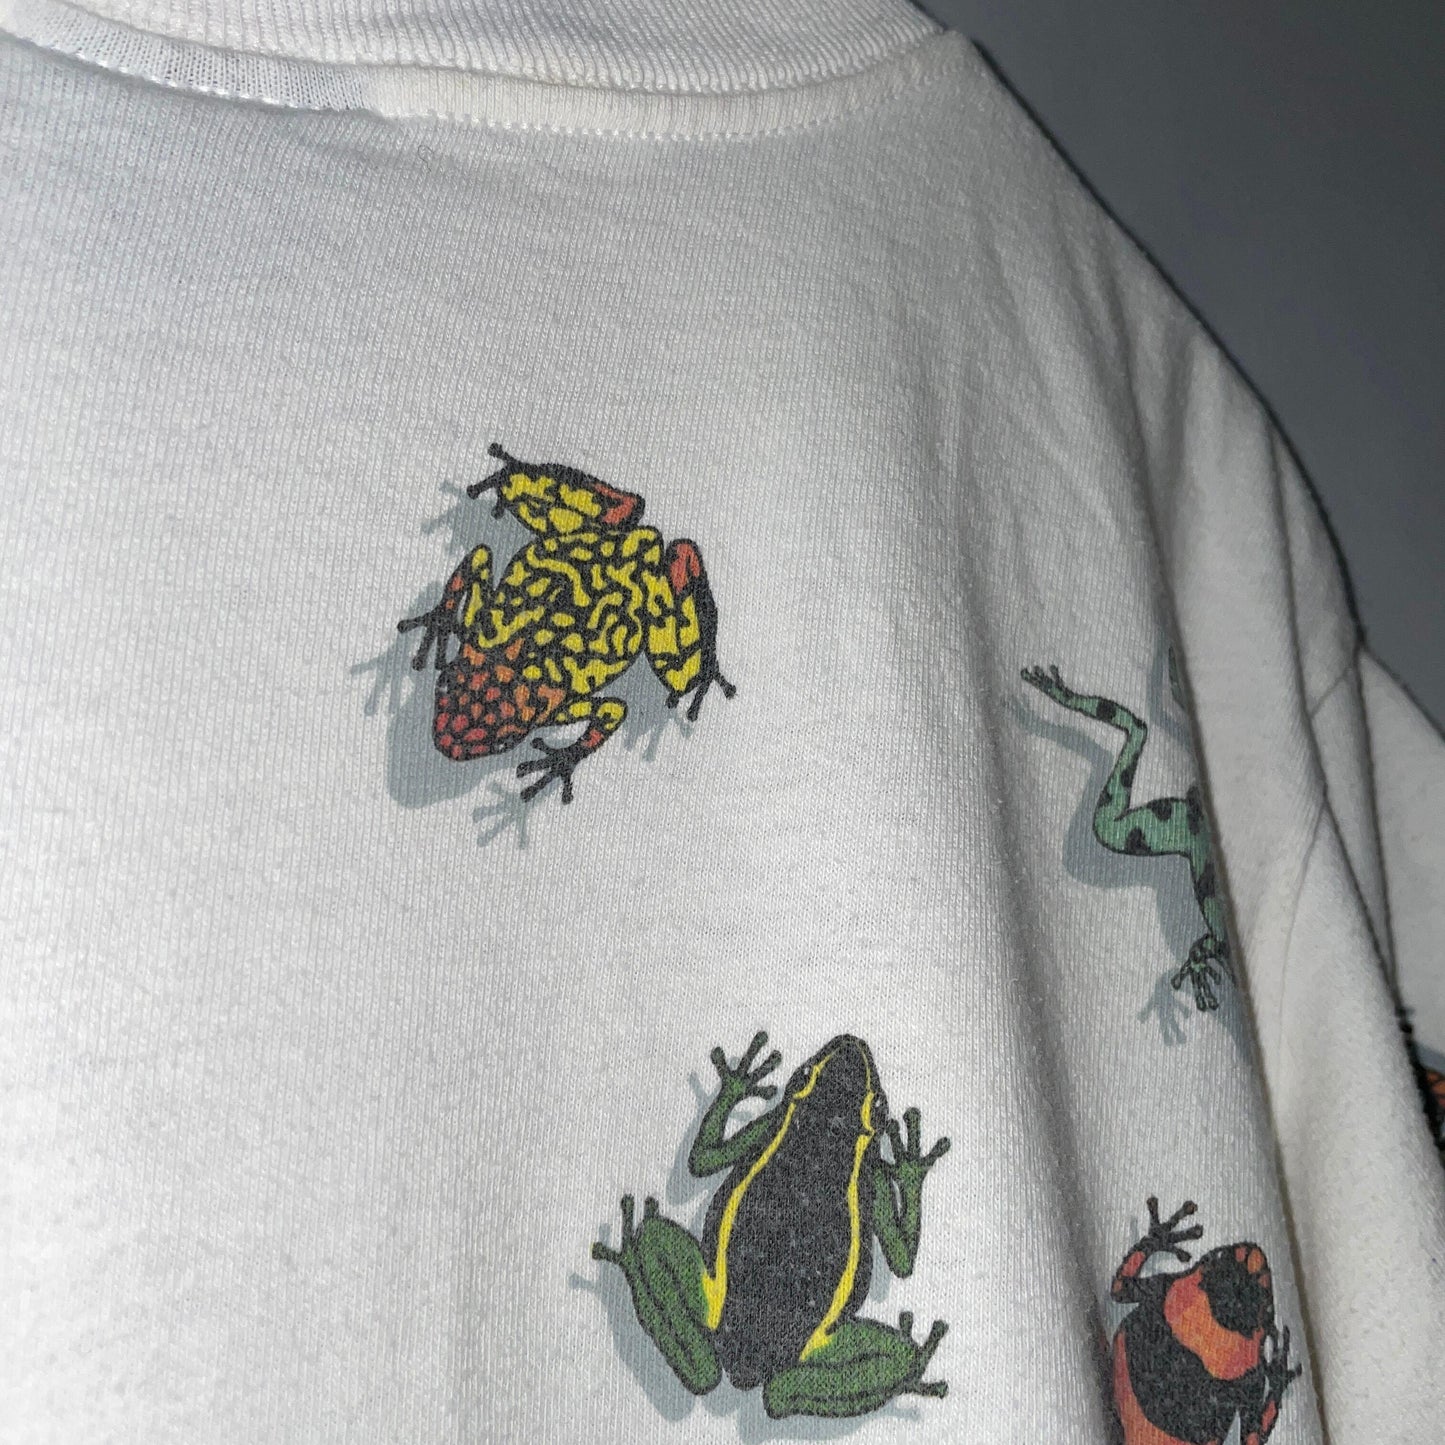 Vintage Tee frog T-shirt